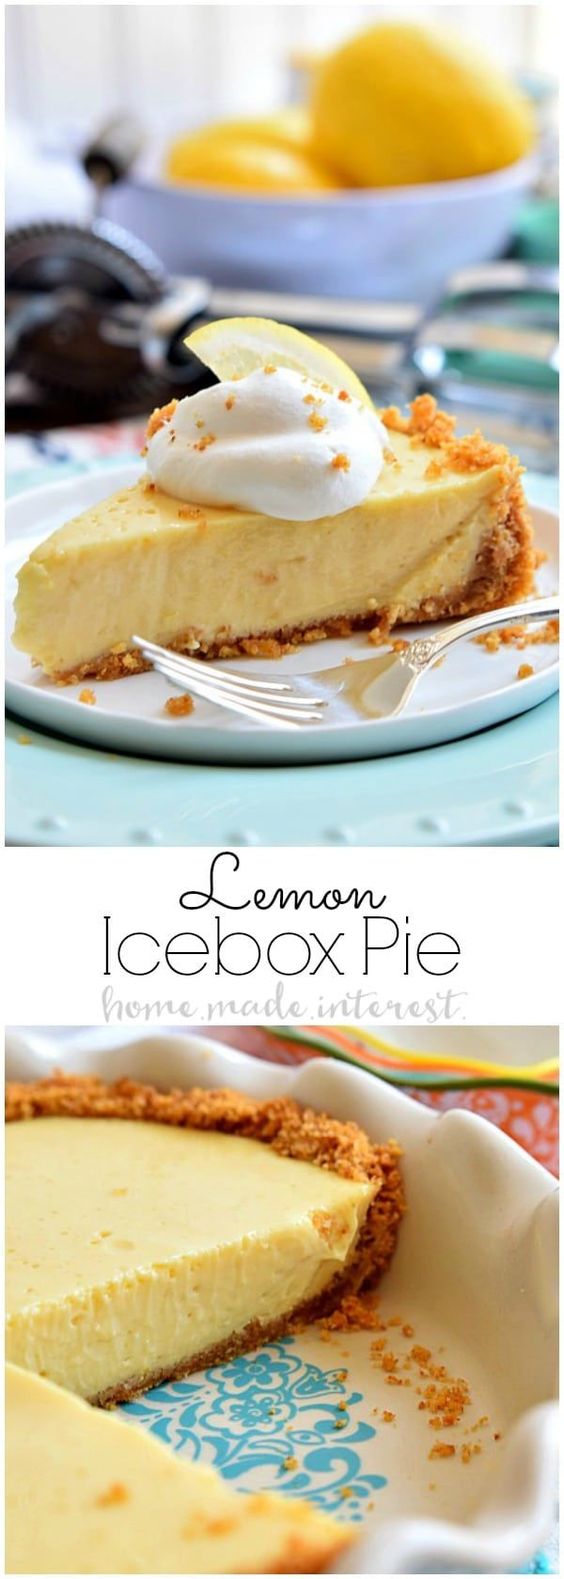 Lemon Icebox Pie By Home Made Interest
